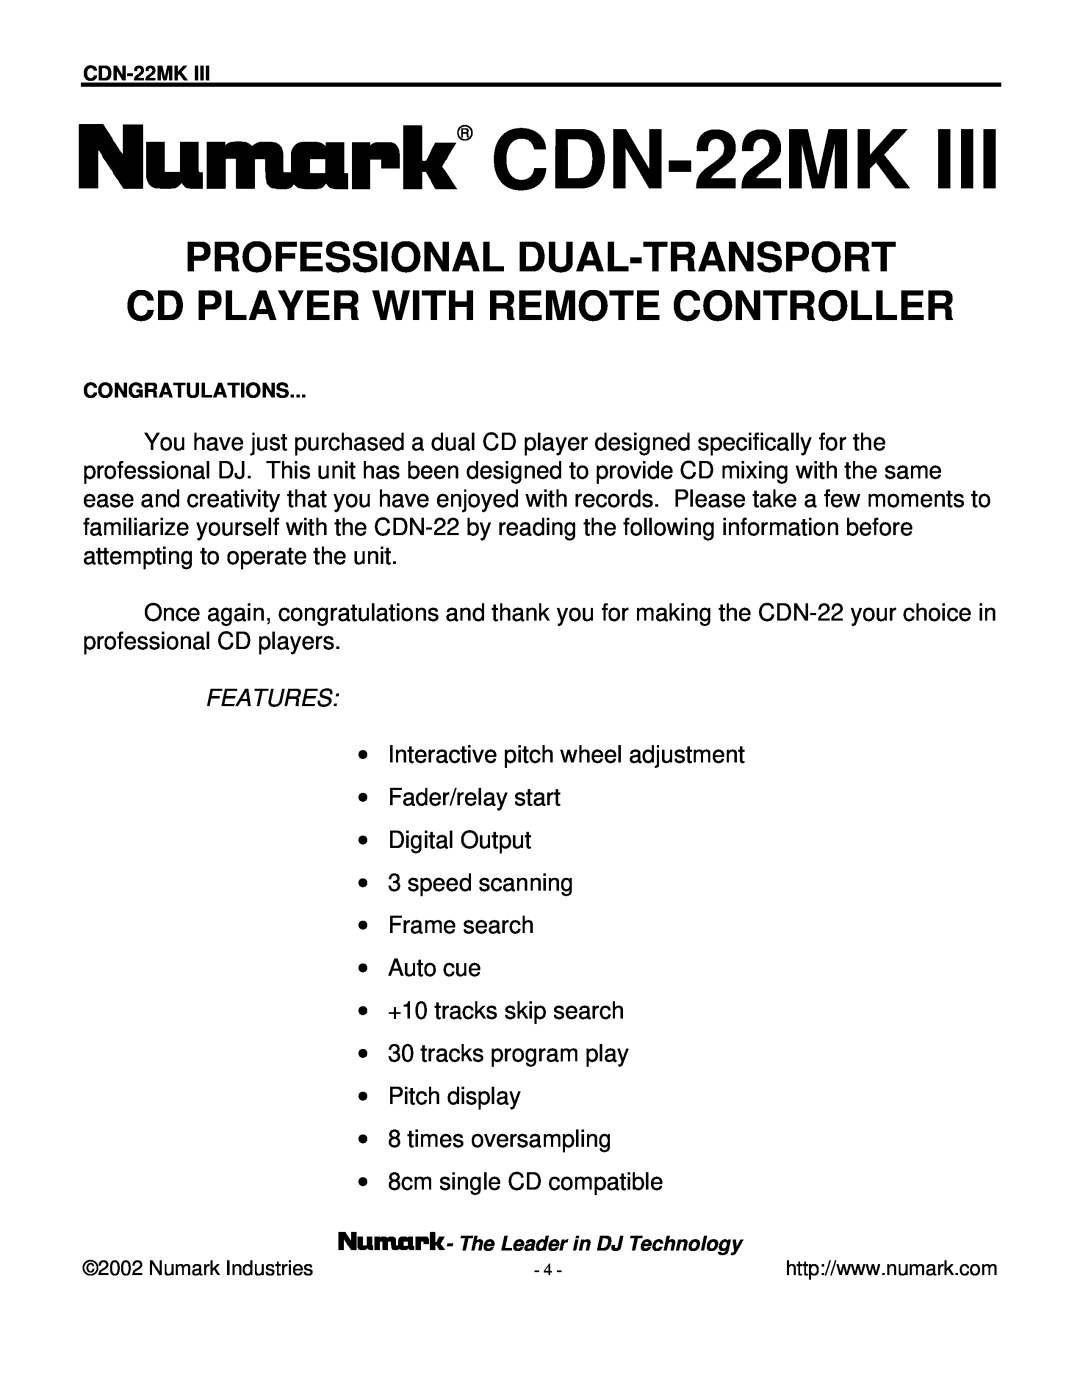 Numark Industries CDN-22MK III manual CDN-22MKIII, Professional Dual-Transport, Cd Player With Remote Controller 